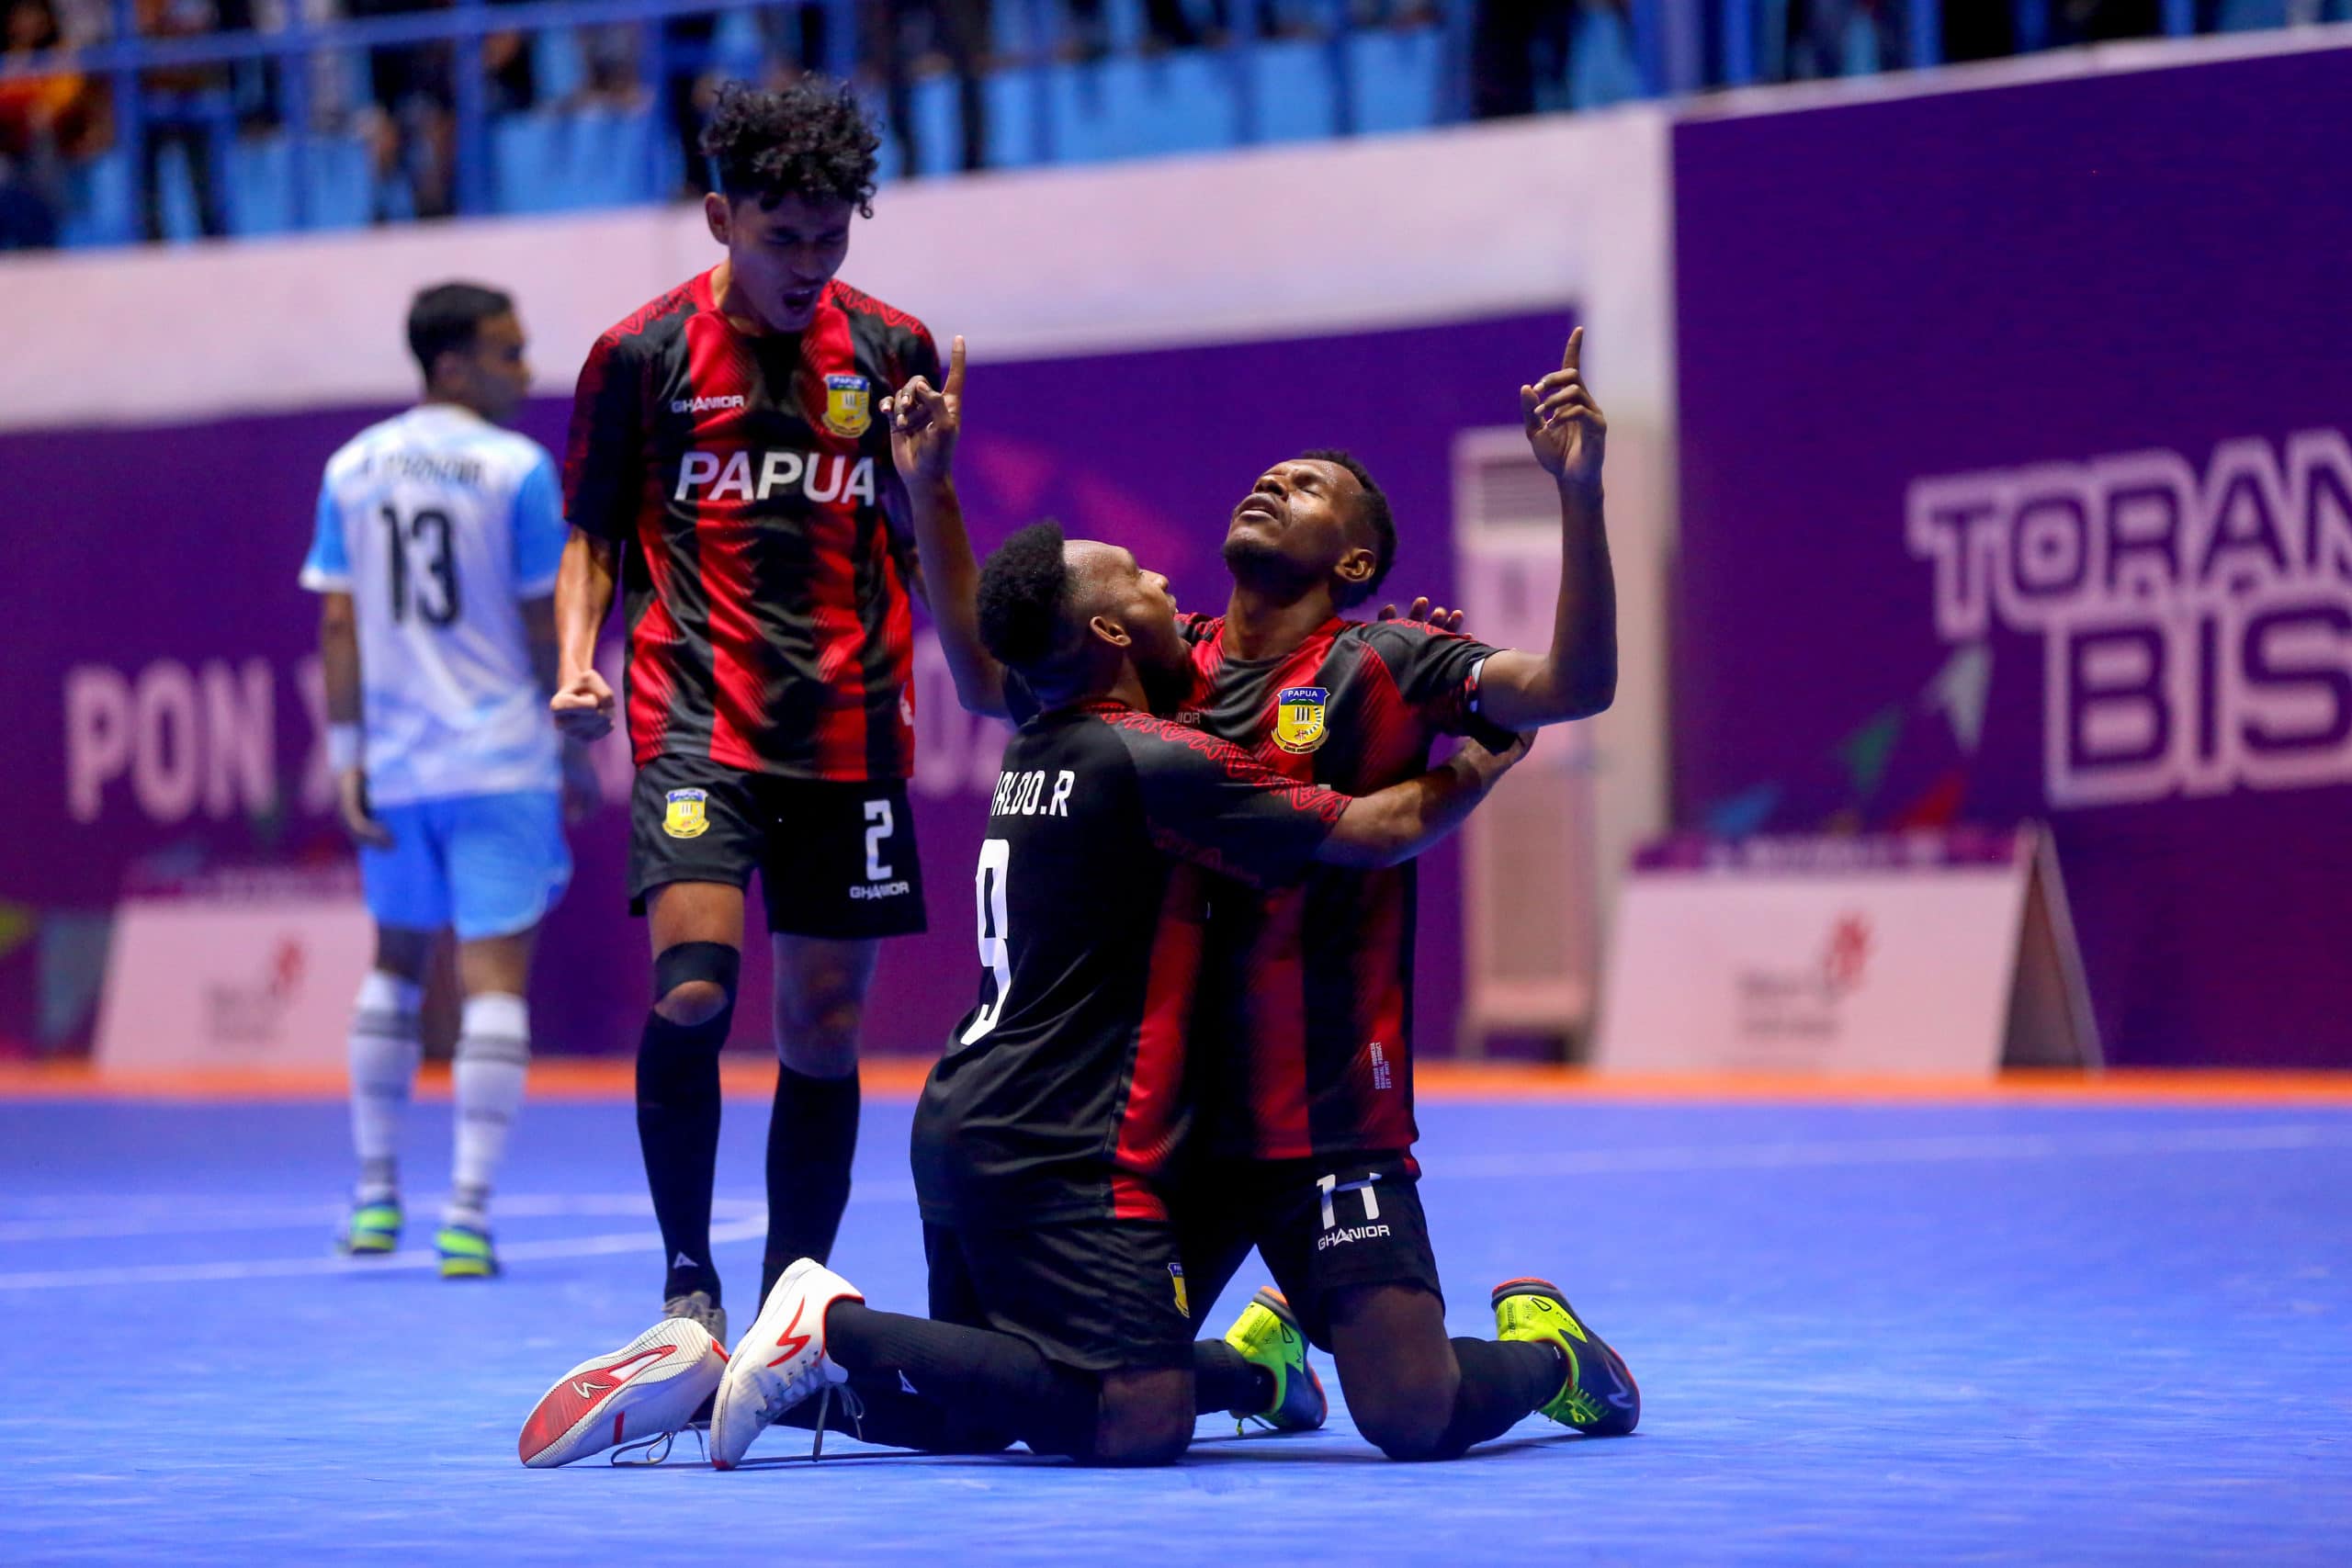 Menang Dua Kali, Tim Futsal Papua Puncaki Klasemen Sementara